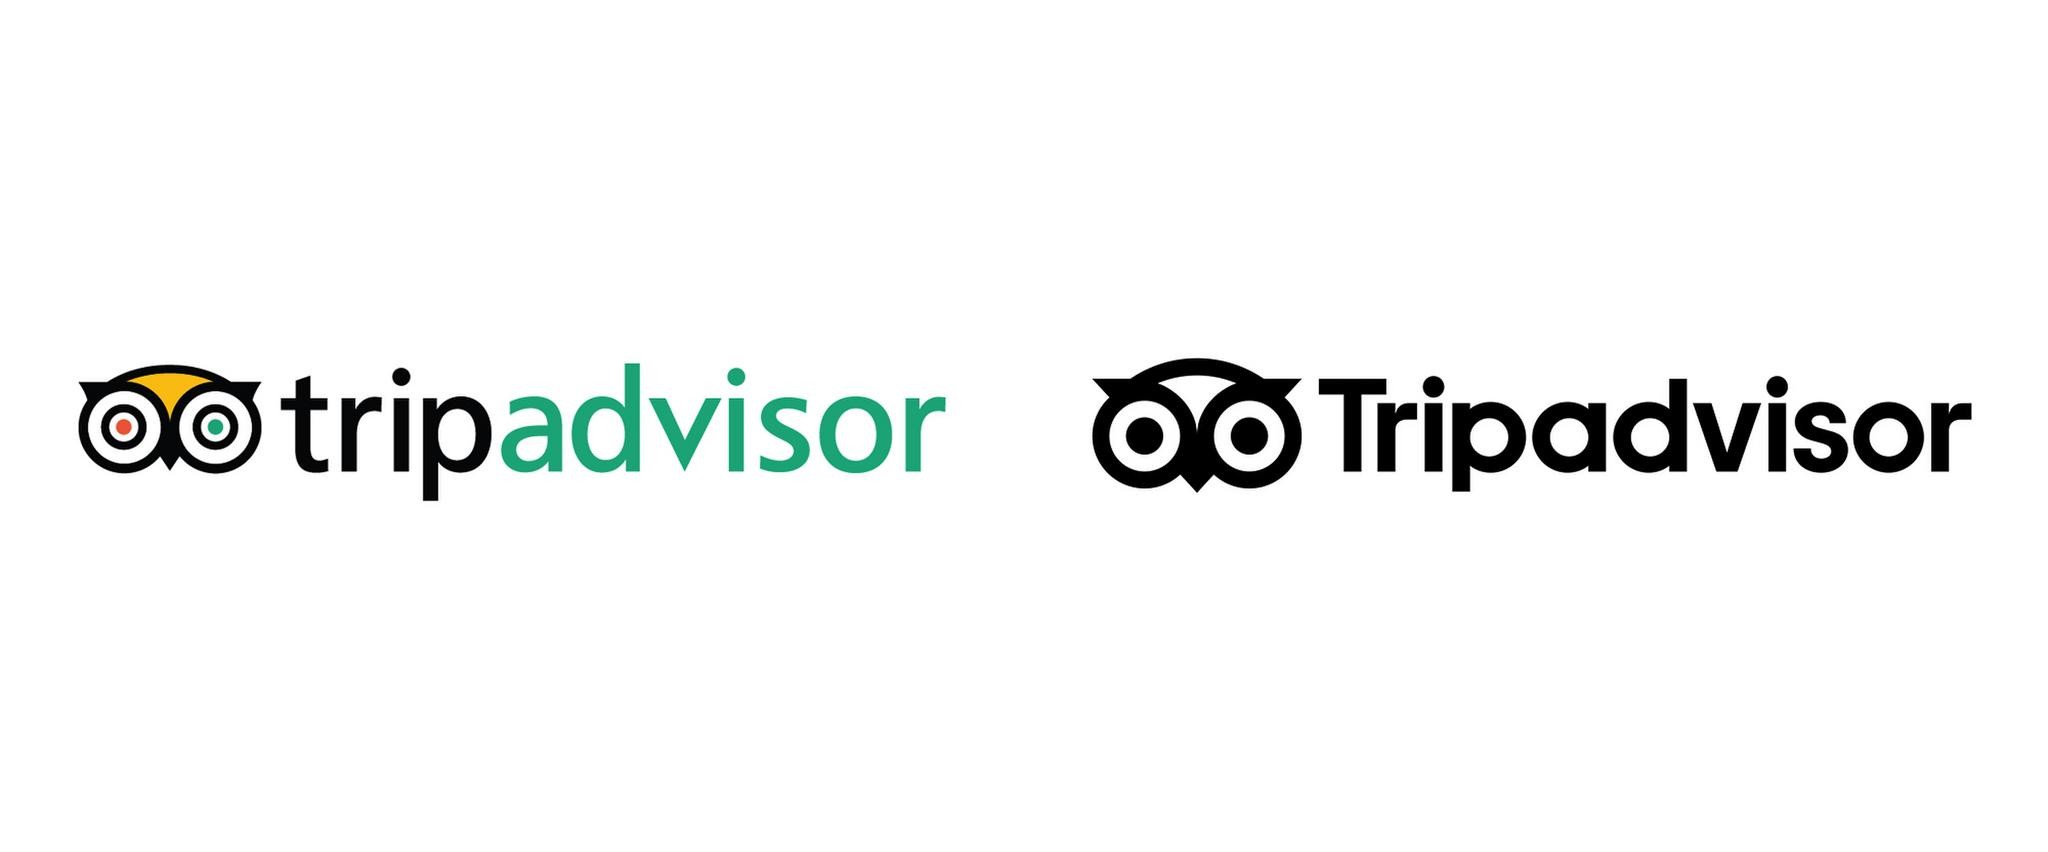 Tripadvisor Rebrand